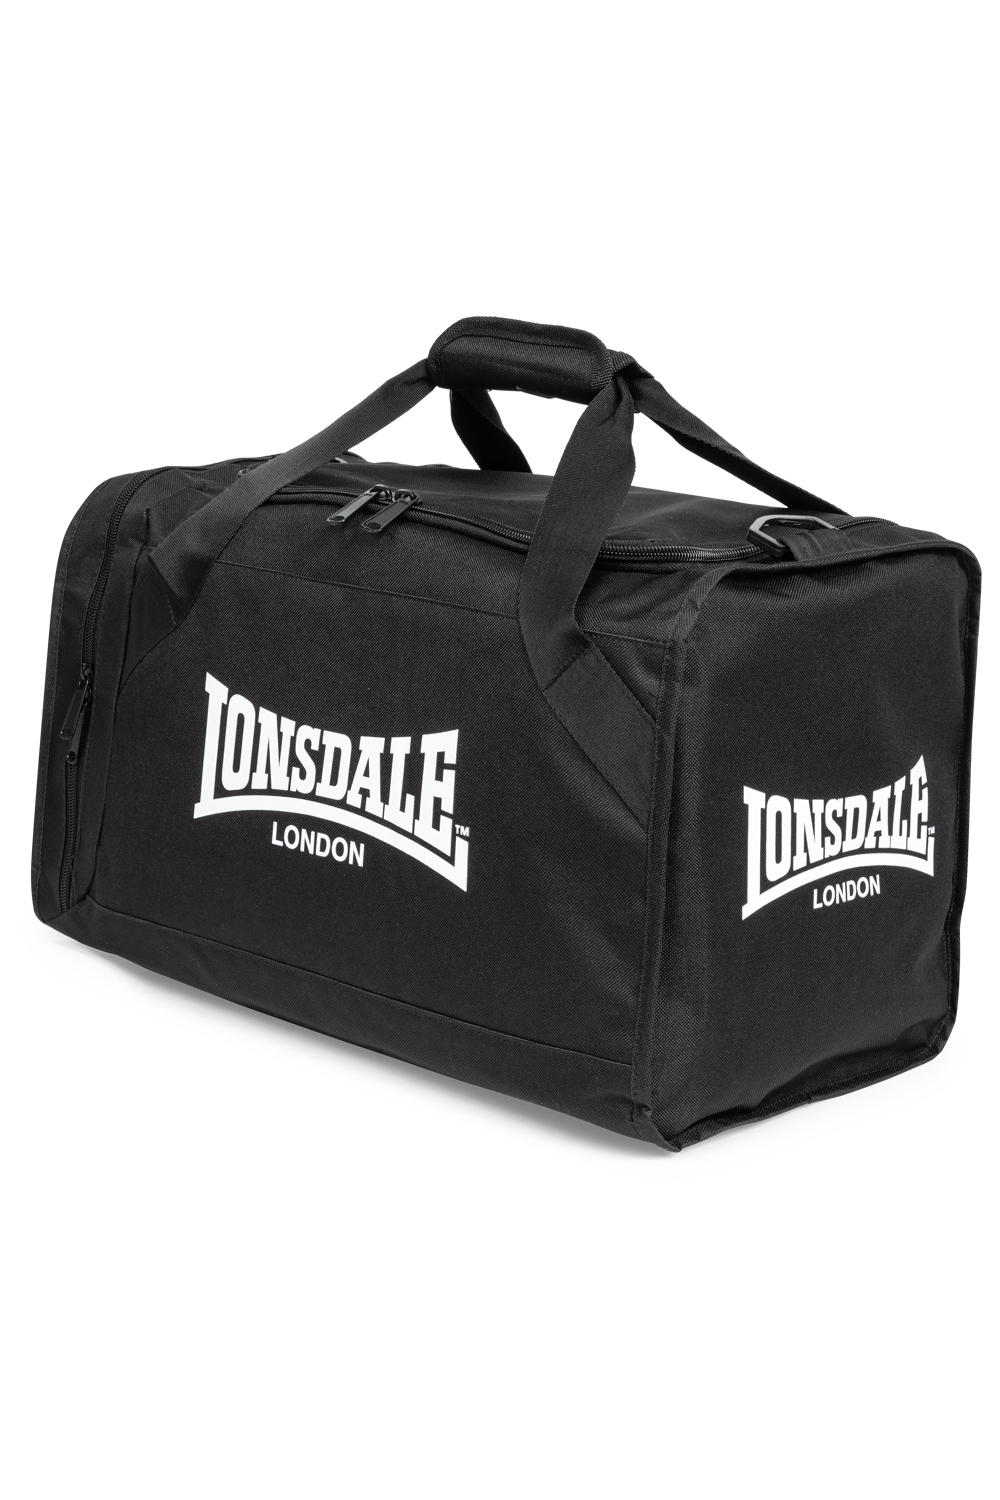 Lonsdale Sport´s bag